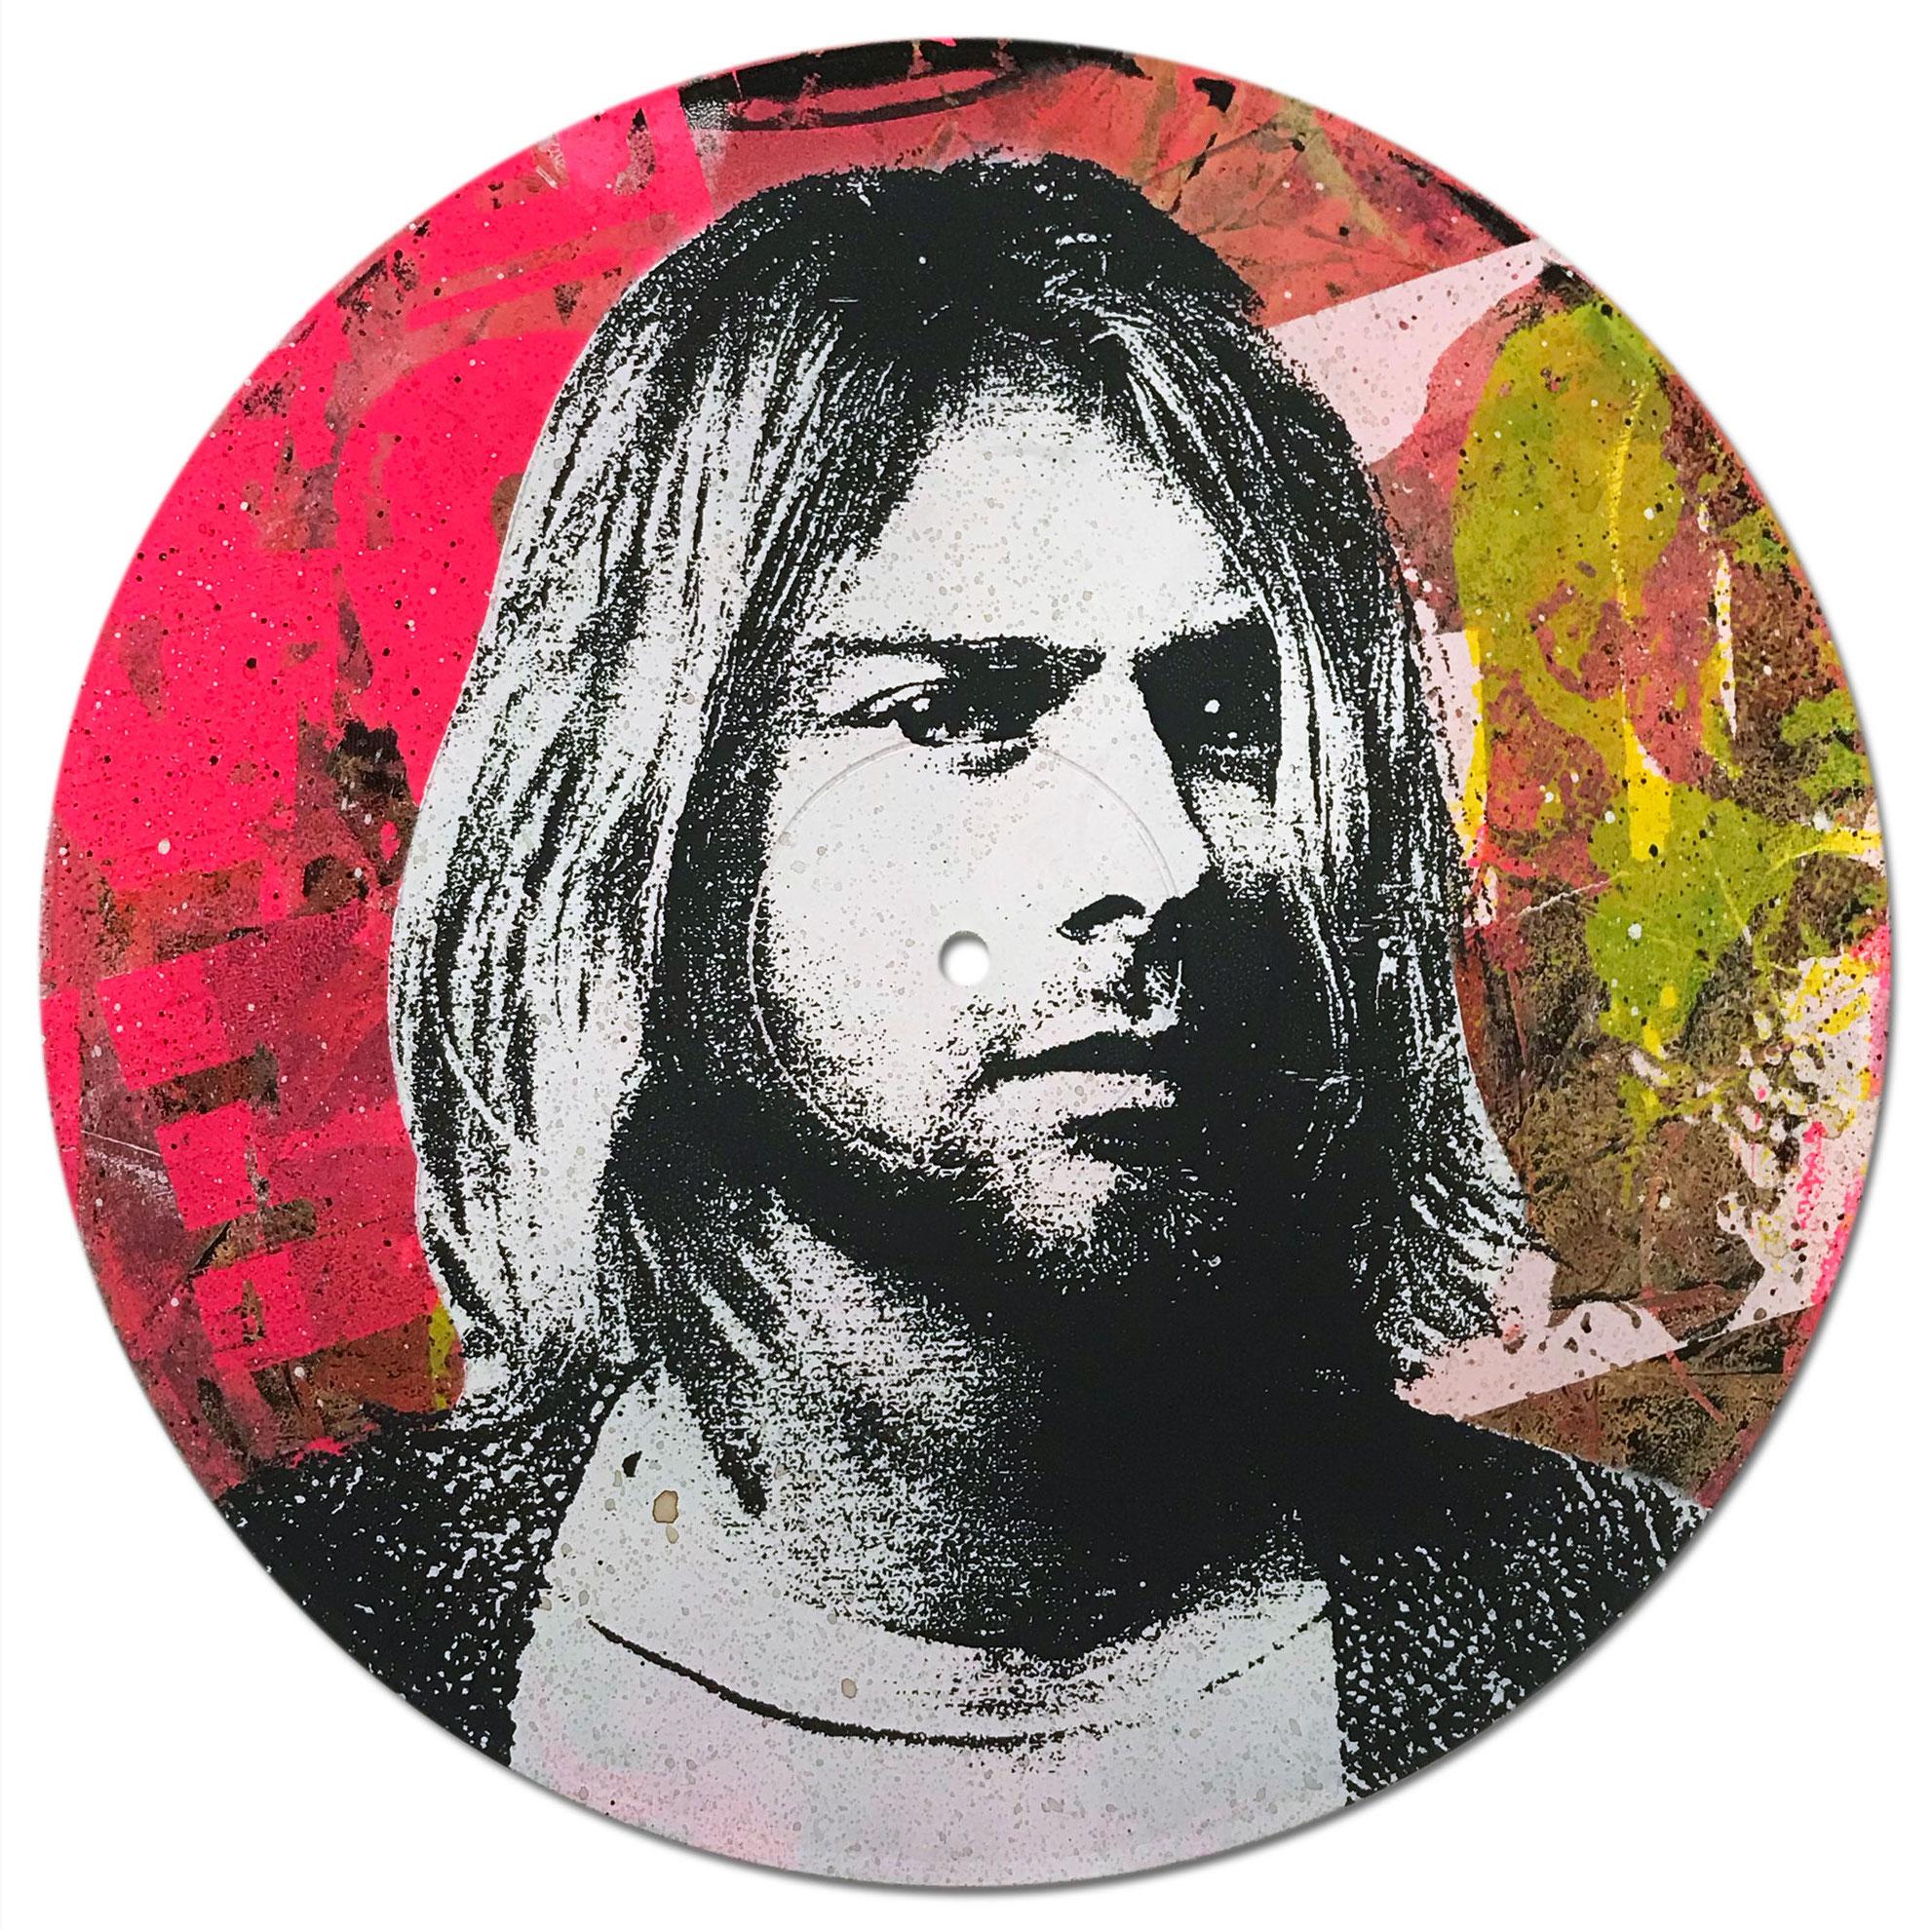 Kurt Cobain Vinyl 1-10, Greg Gossel Pop Art LP Record (Singles & Sets Available) For Sale 3